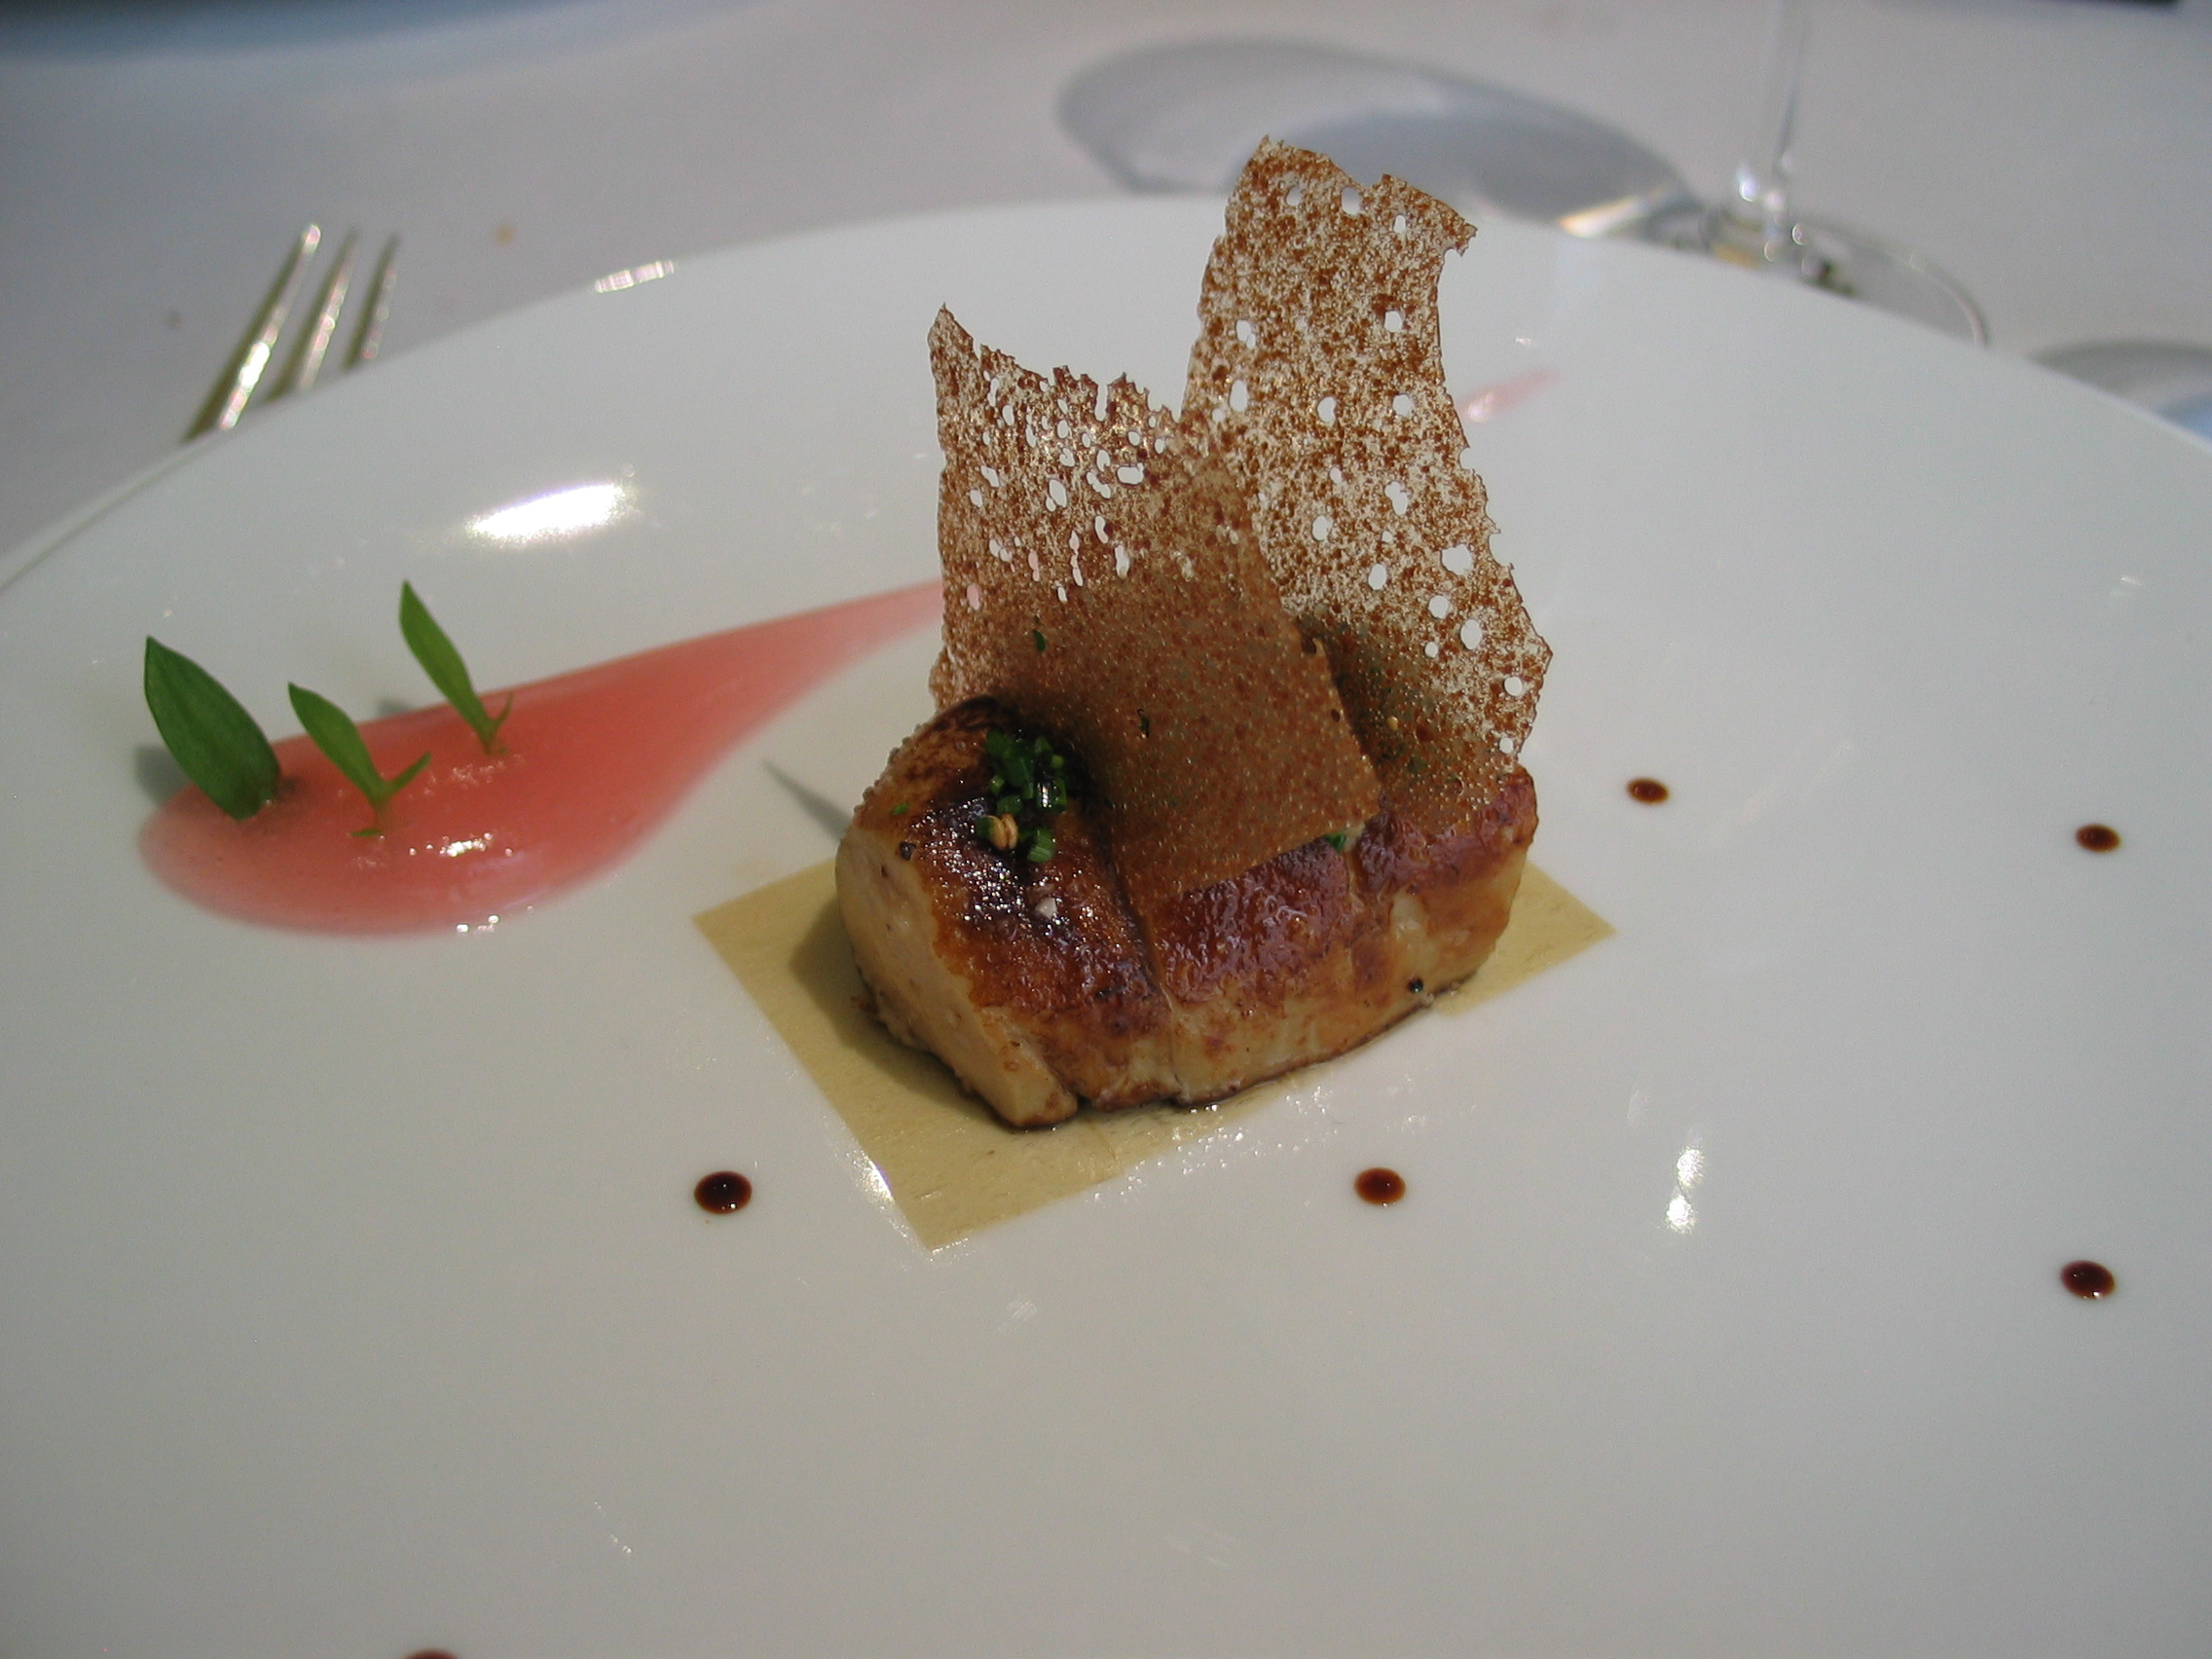 Rhubarb foire gras 2